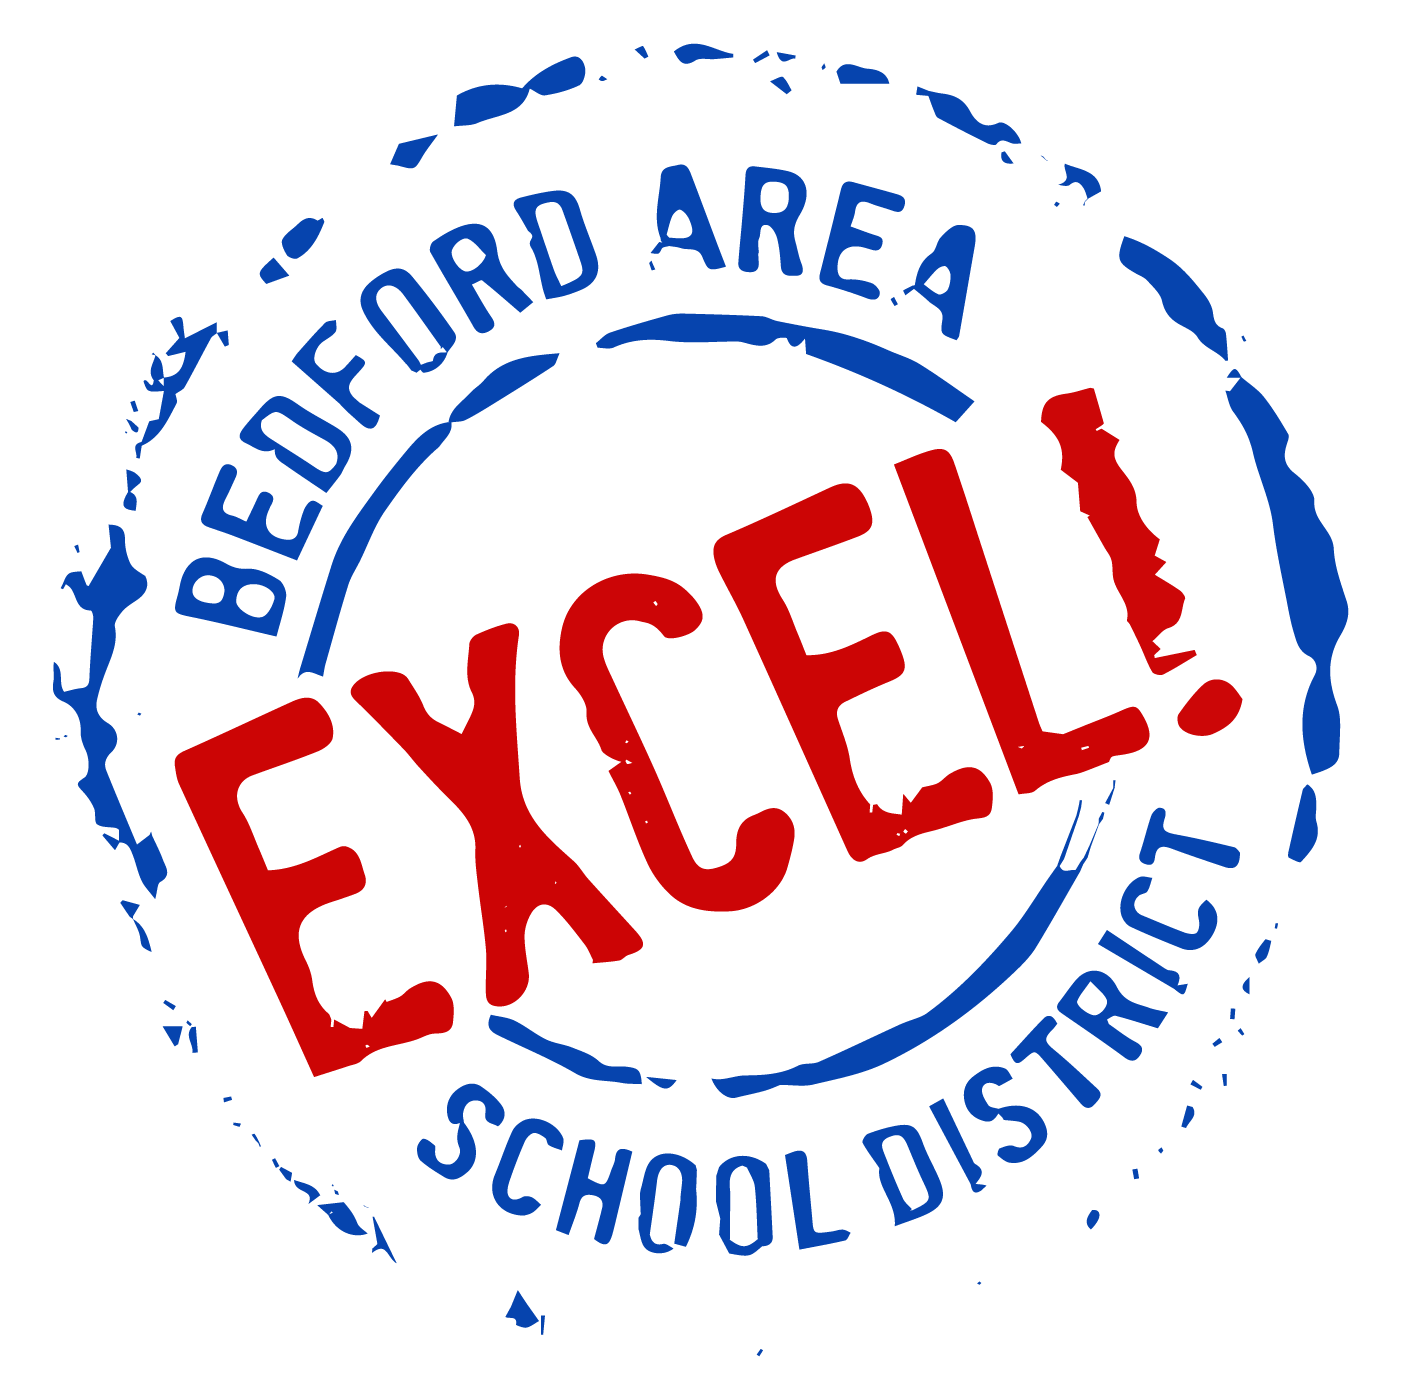 Bedford Area School District Excel!